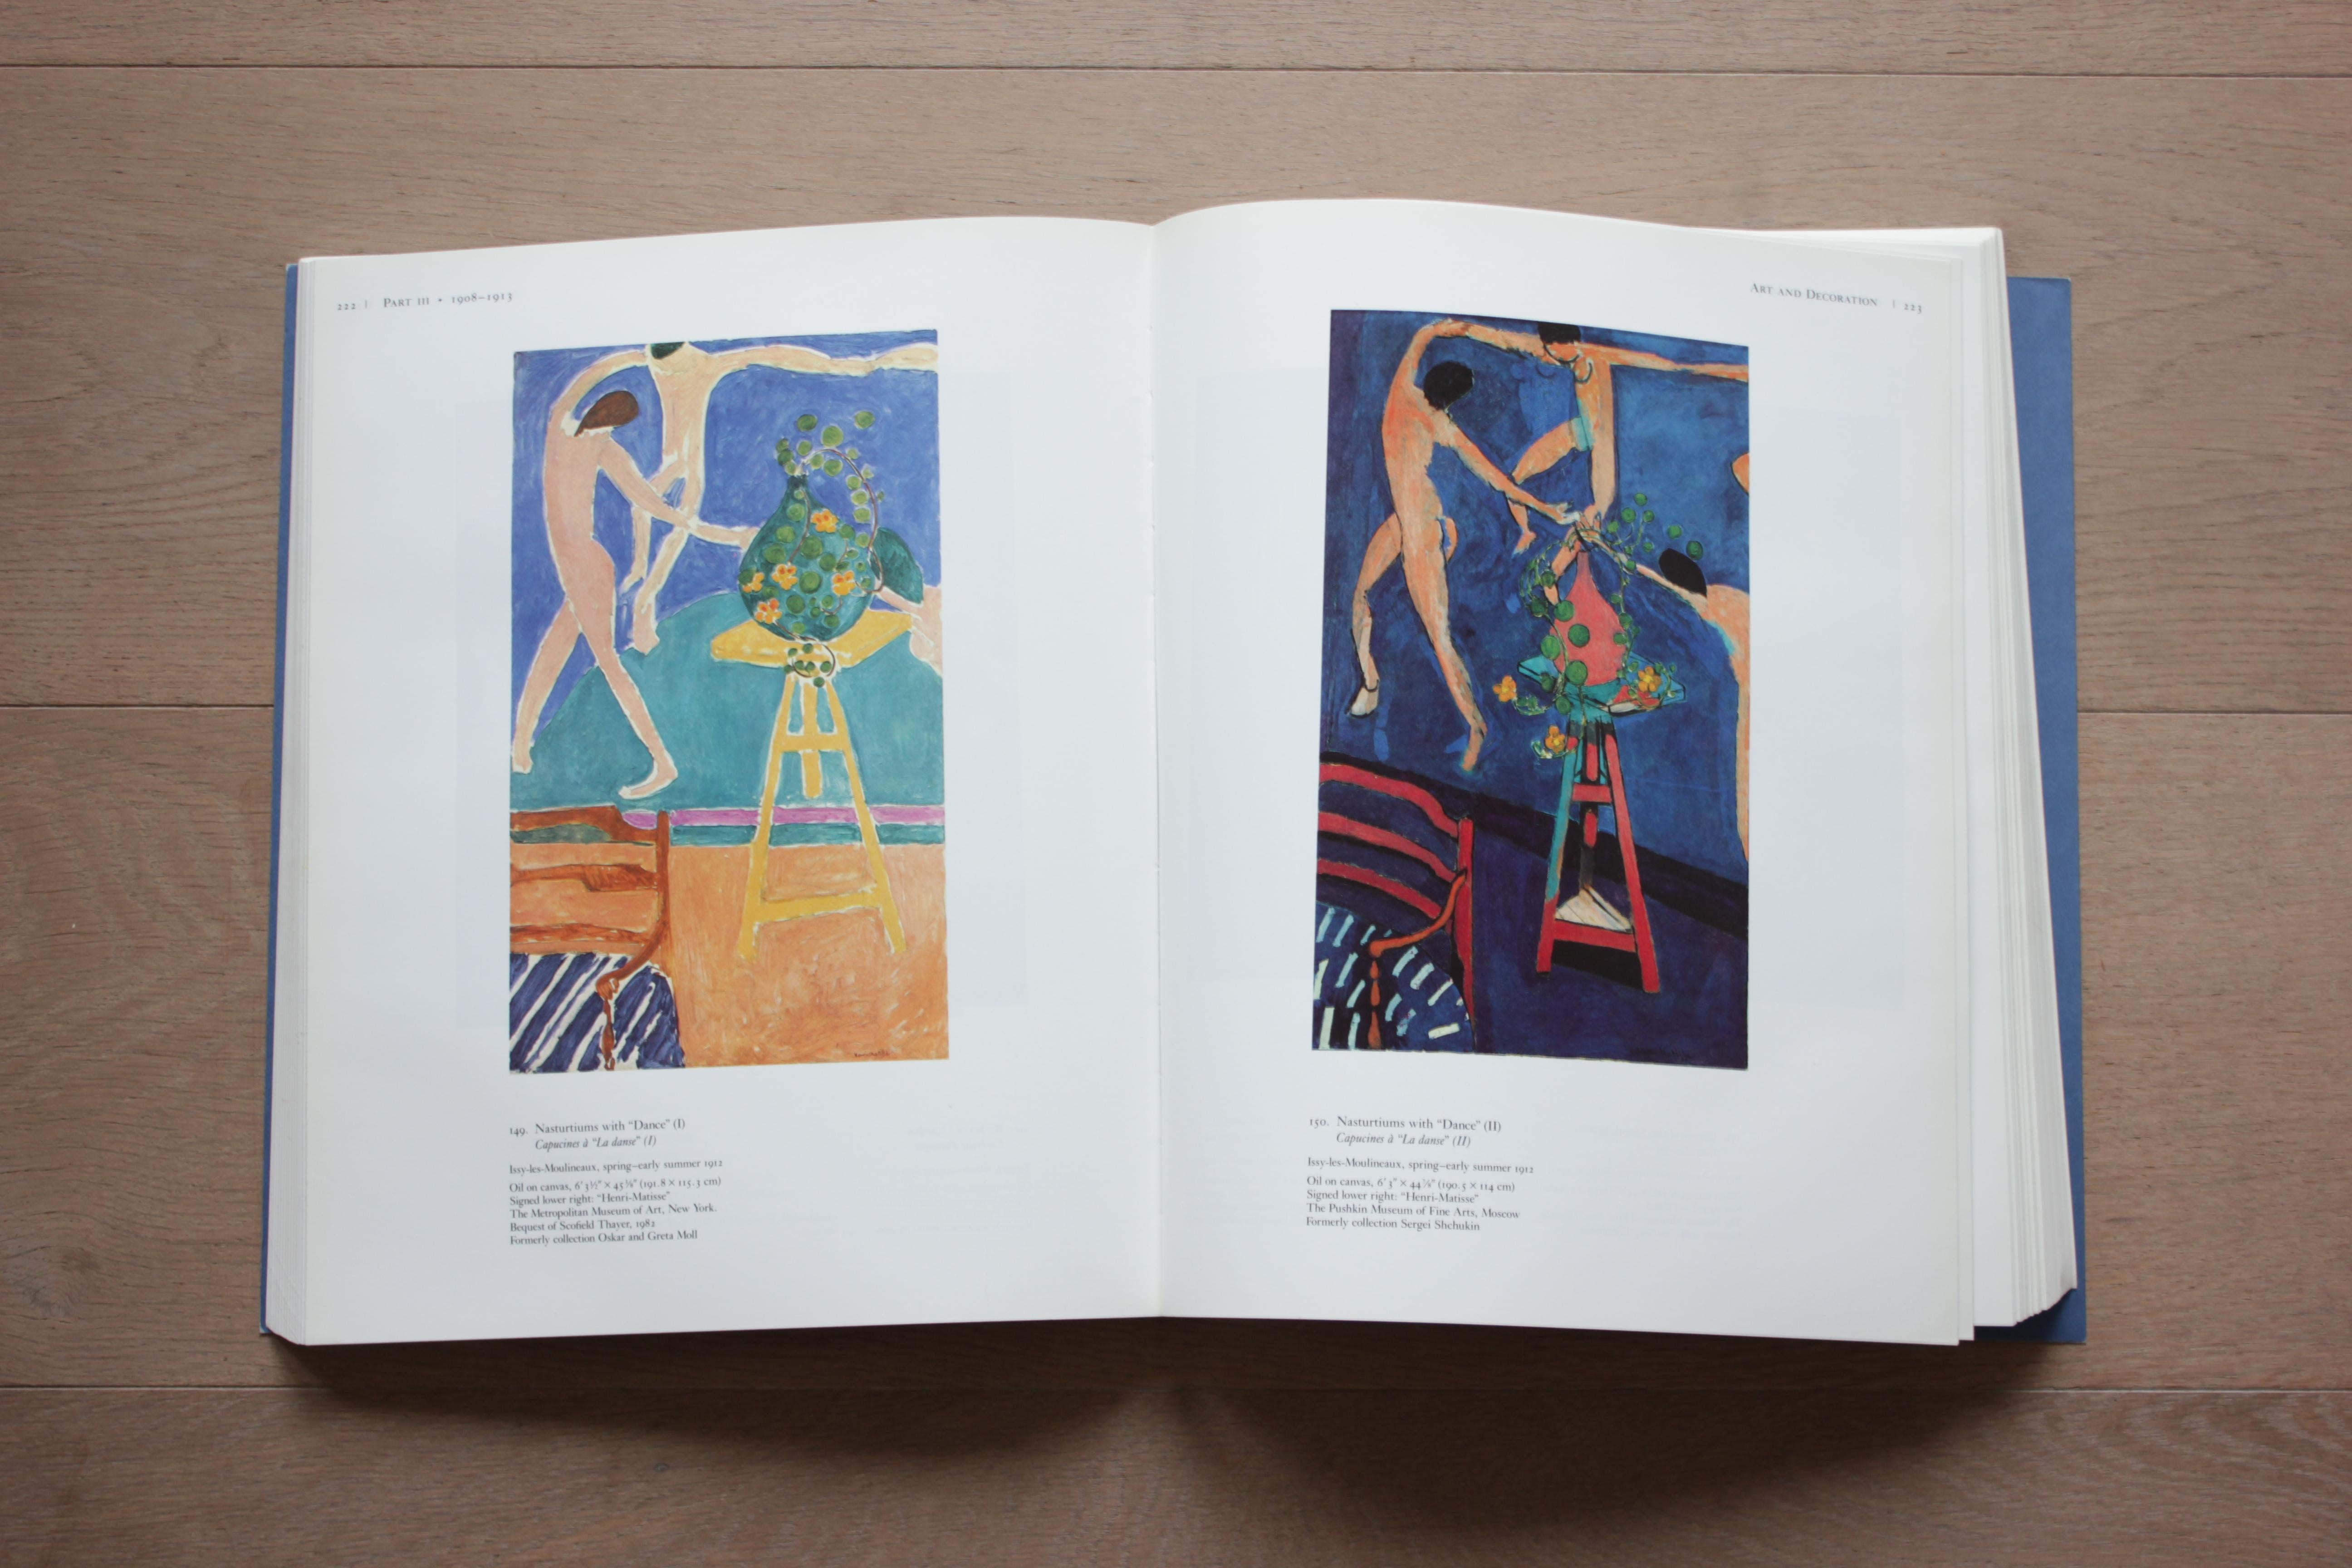 Italian Henri Matisse: A Retrospective, John Elderfield, Coffee Table Art Book